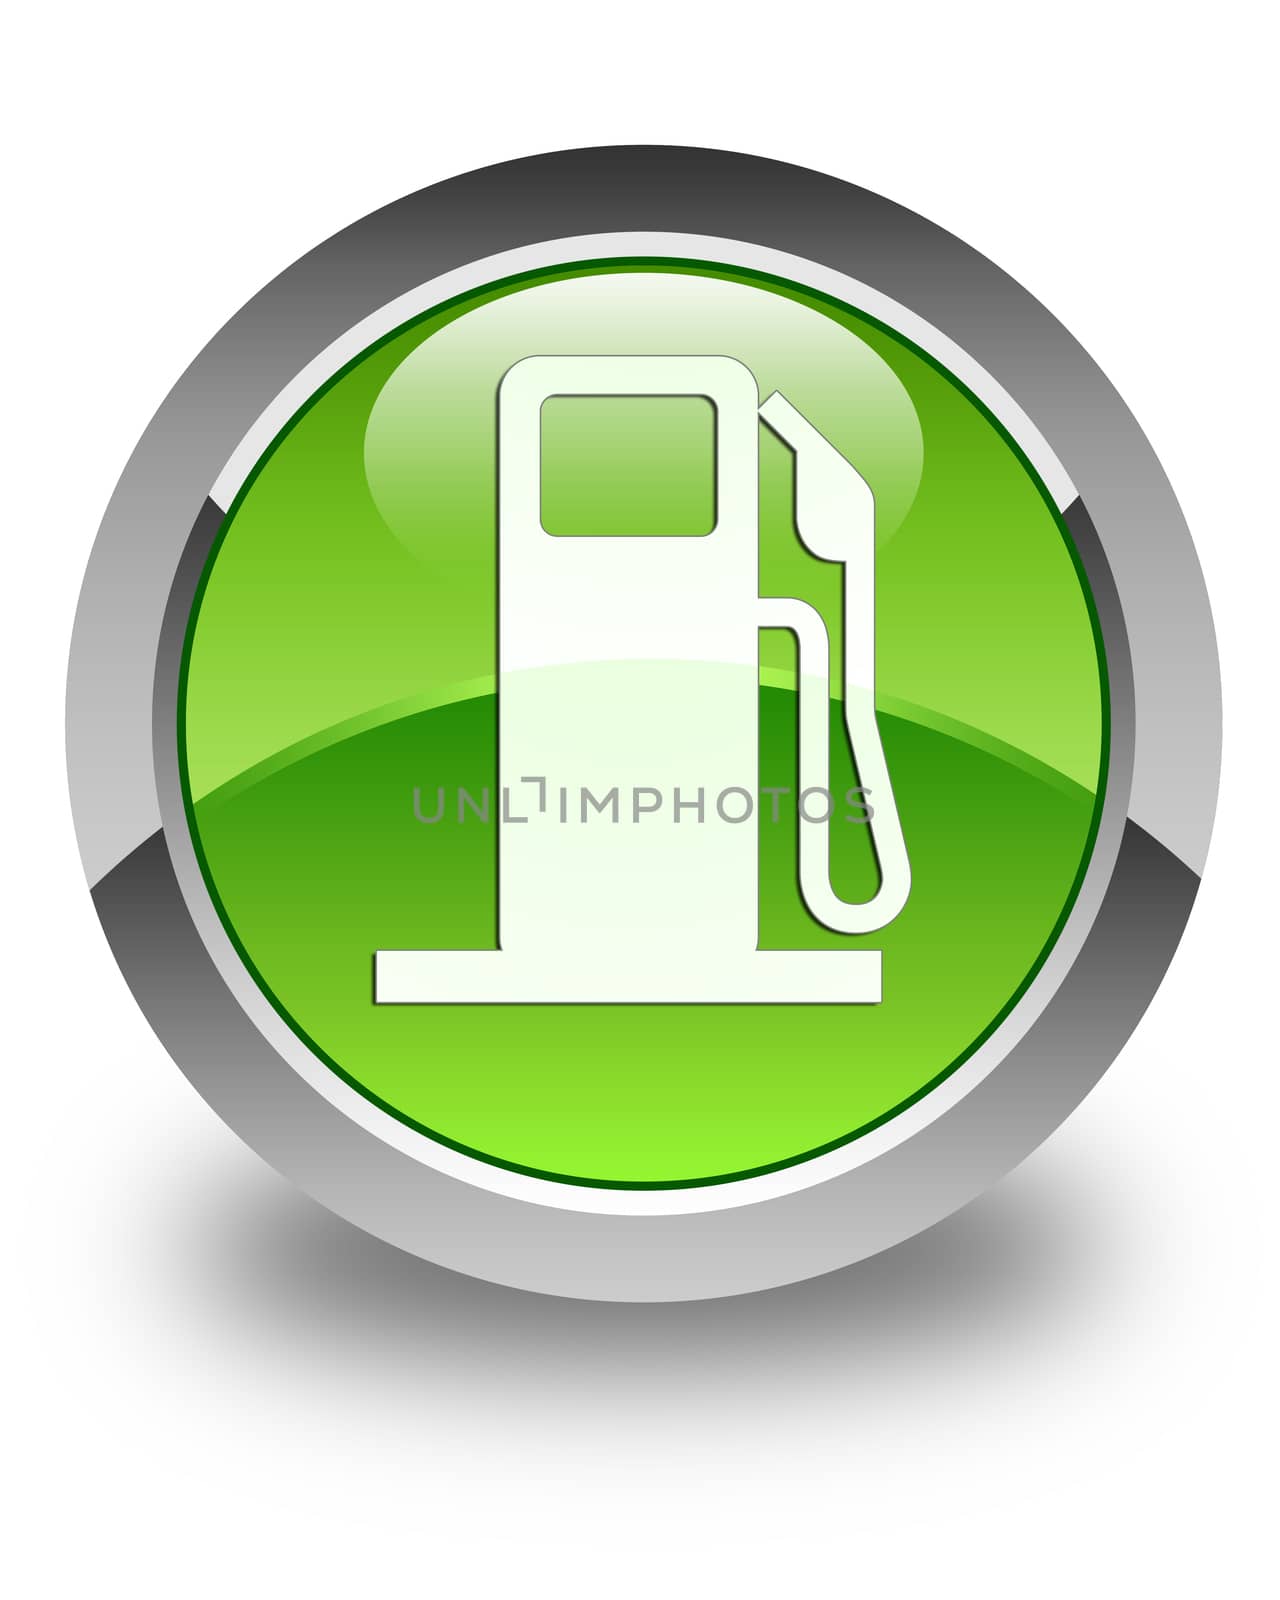 Pump station icon glossy green round button by faysalfarhan